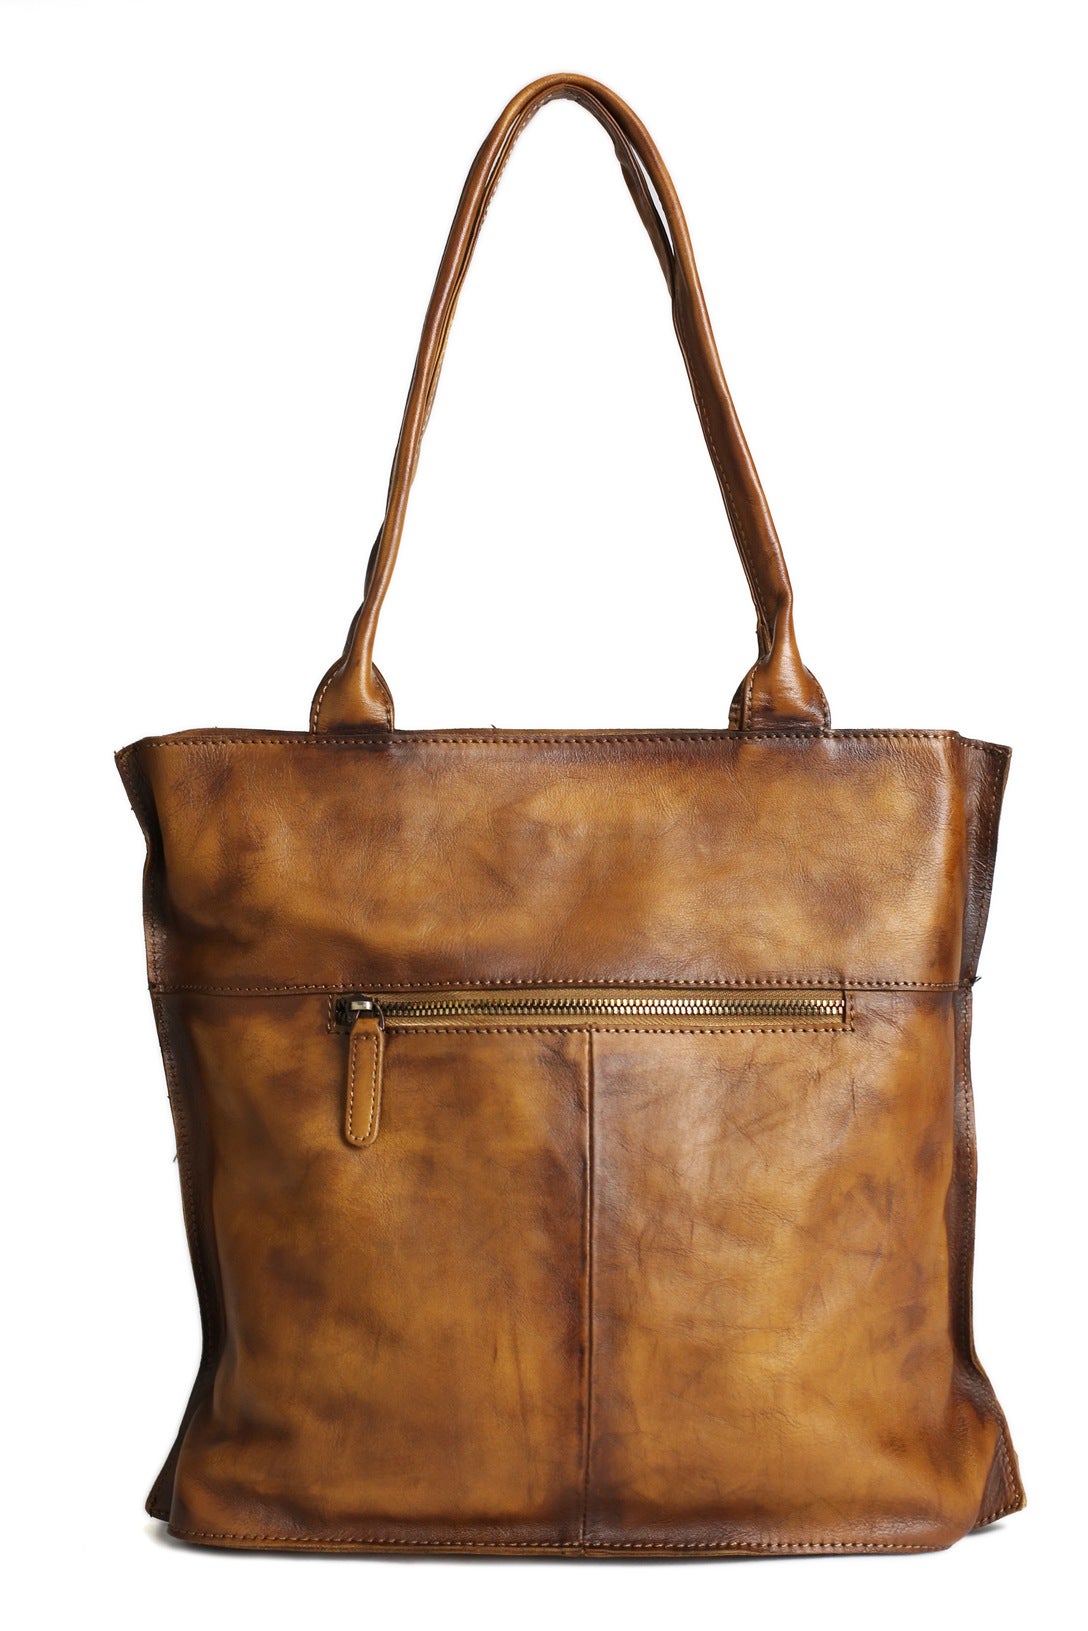 MoshiLeatherBag - Handmade Leather Bag Manufacturer — Vintage Brown ...